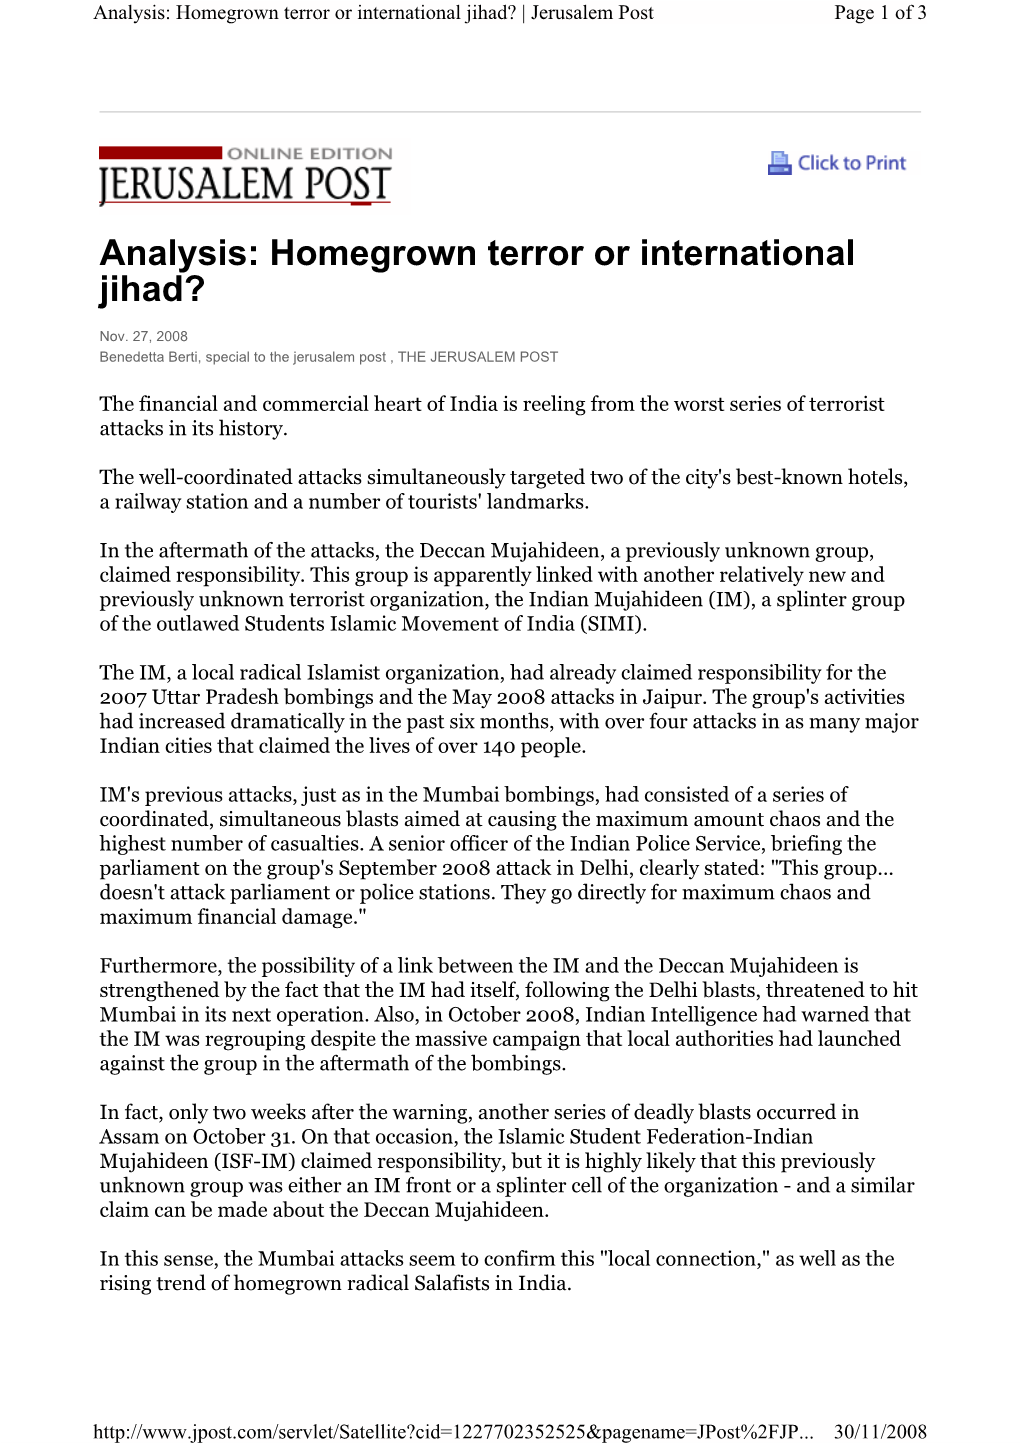 Analysis: Homegrown Terror Or International Jihad? | Jerusalem Post Page 1 of 3